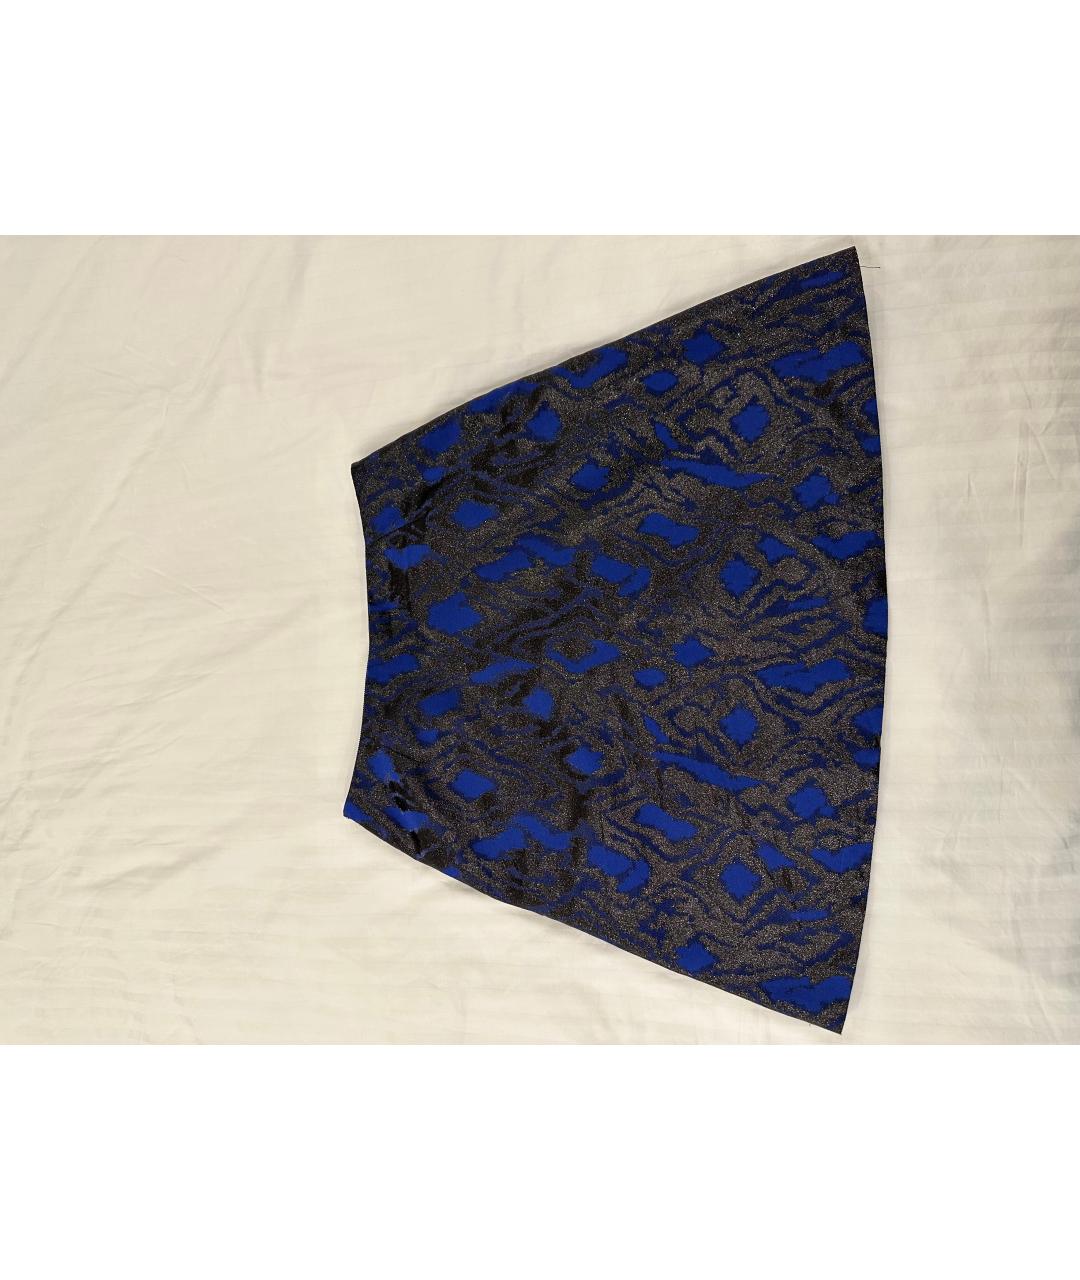 MARKUS LUPFER Синяя полиэстеровая юбка мини, фото 2